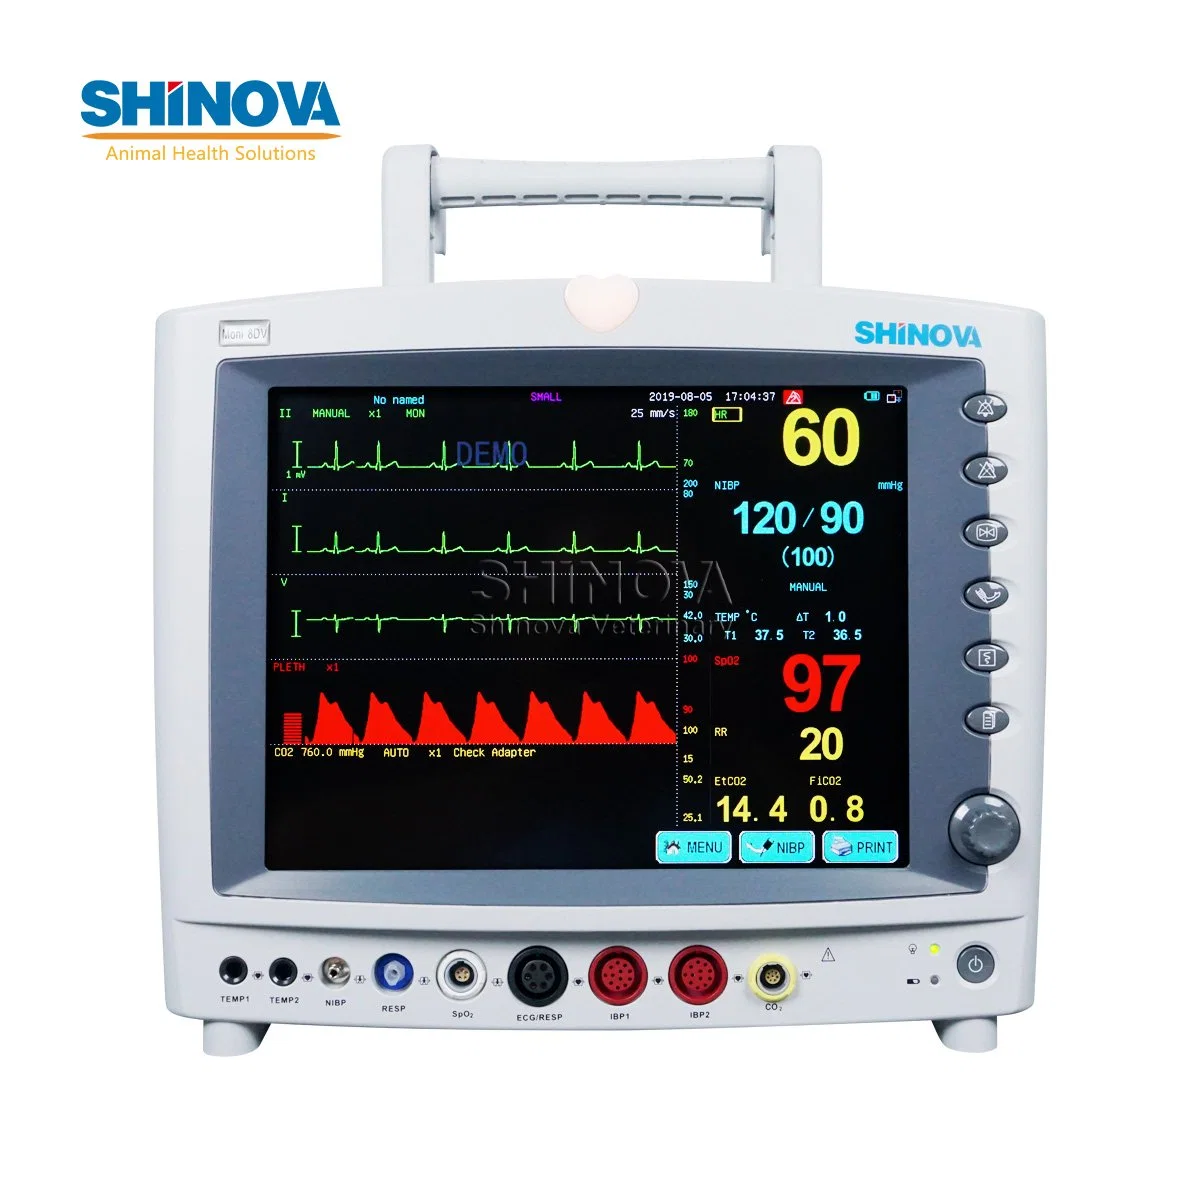 Shinova 12,1 Zoll Touchscreen Multi-Parameter Veterinary Monitor mit EtCO2 für Verwendung Im Tierkrankenhaus